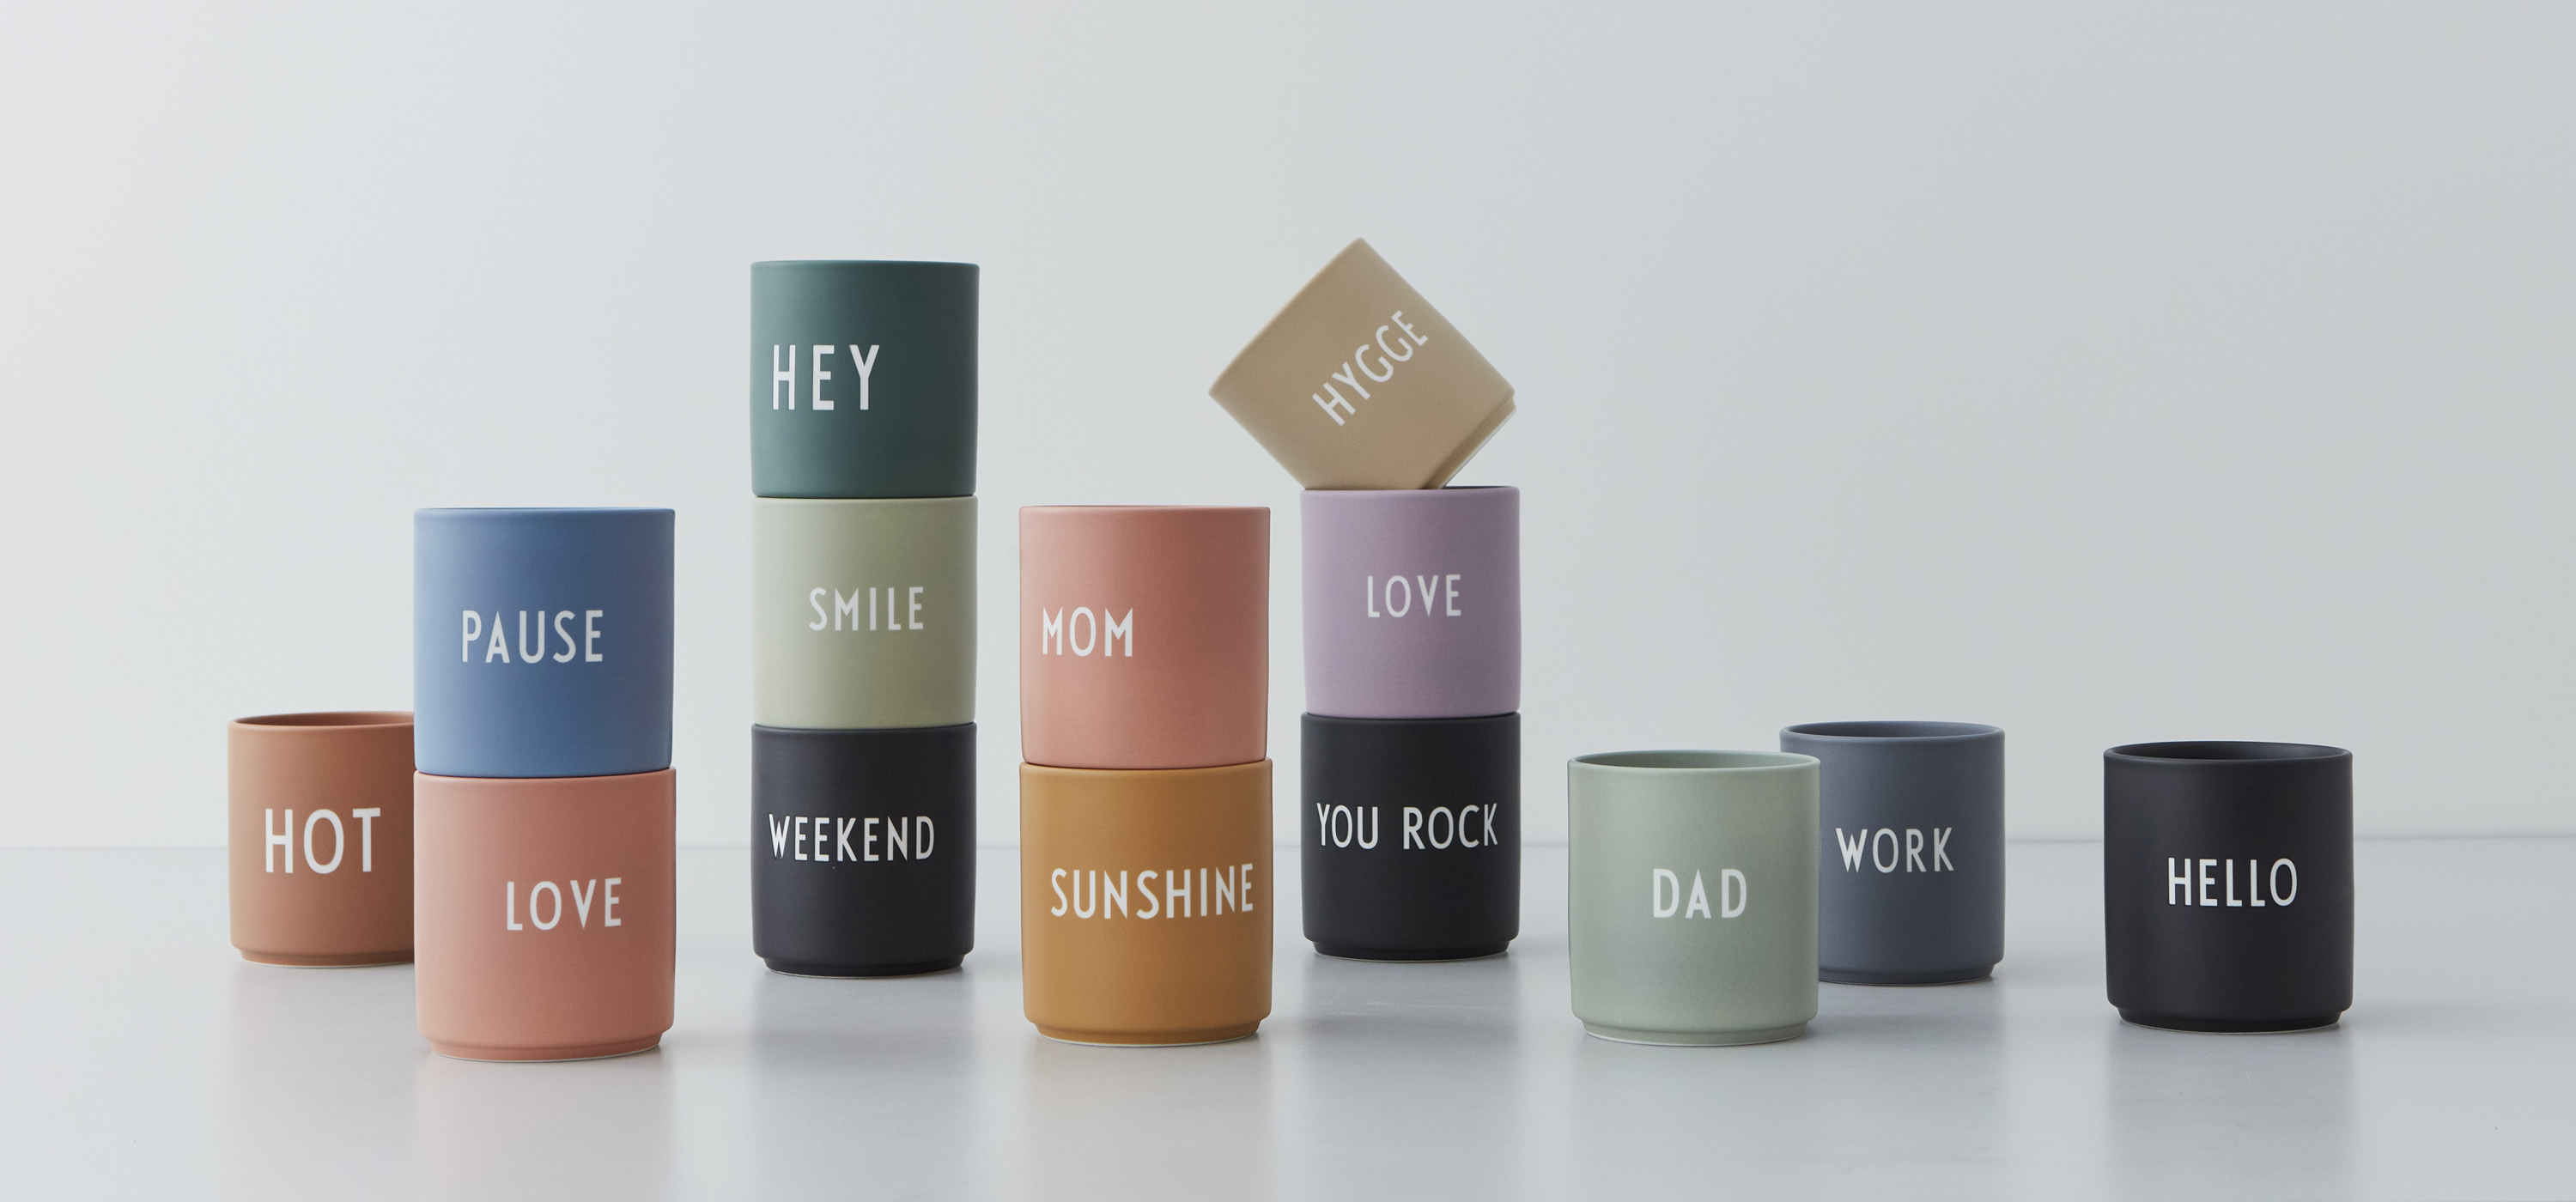 Design Letters Favourite Cup YOU ROCK, Becher Porzellan, Farbe: Schwarz 